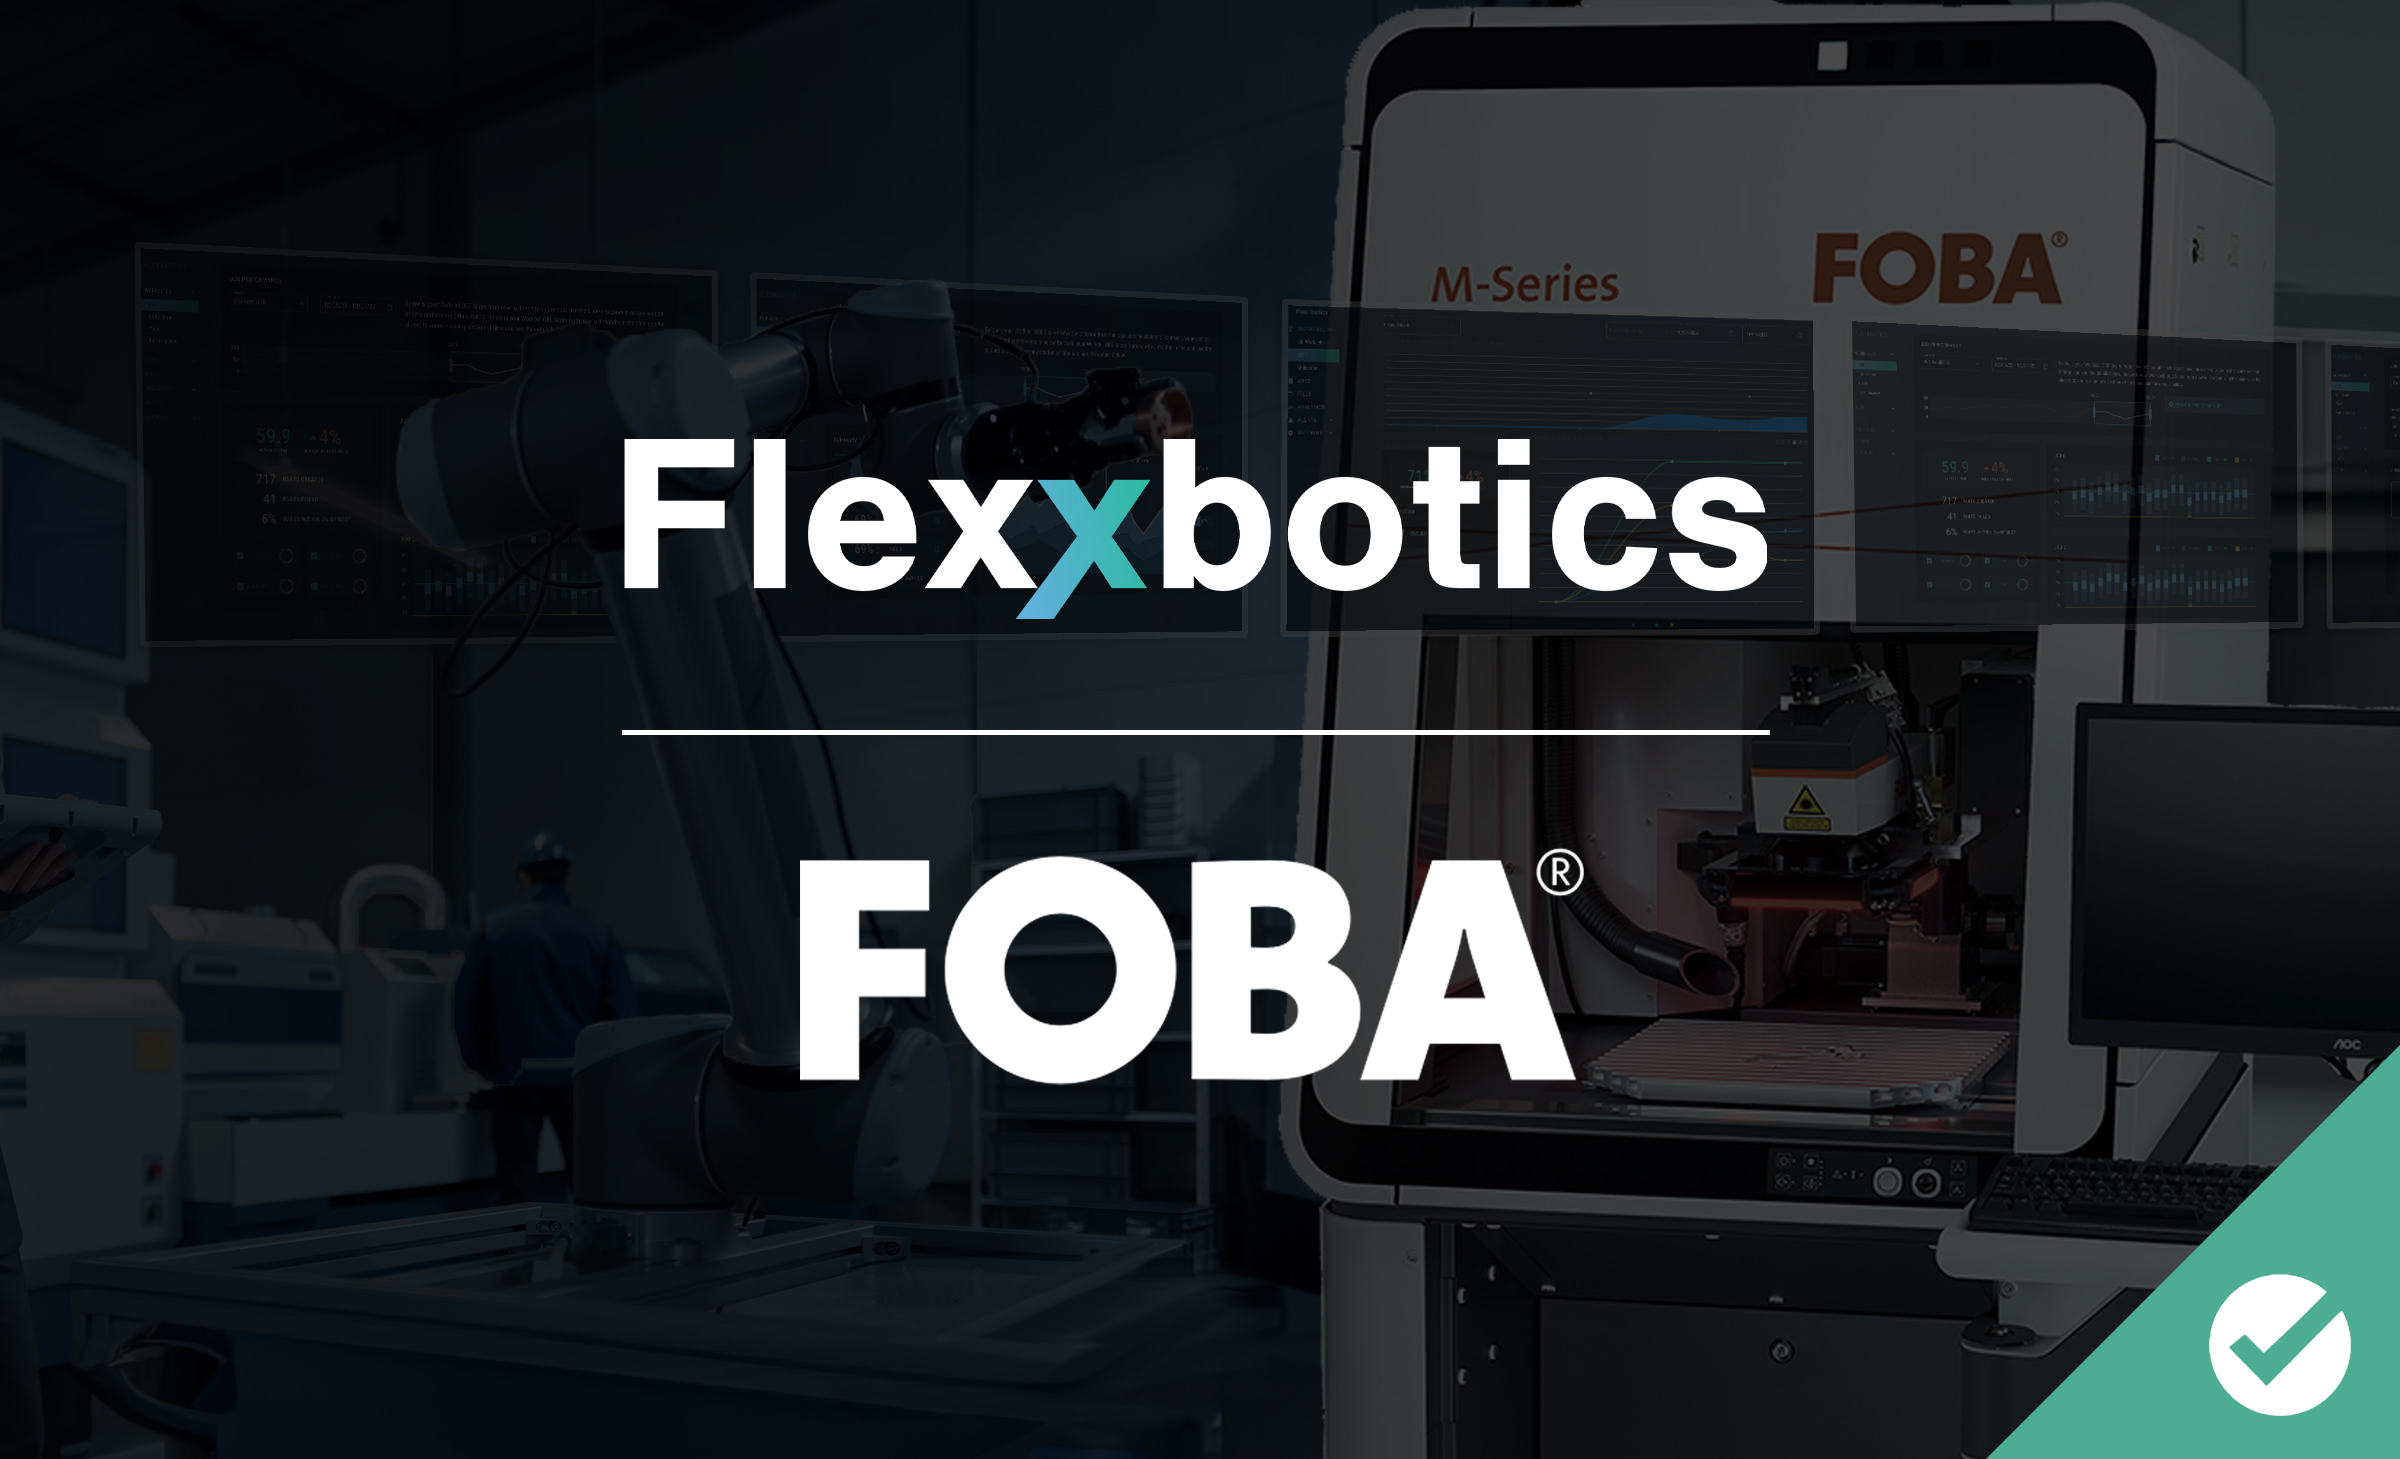 Flexxbotics FOBA Compatability